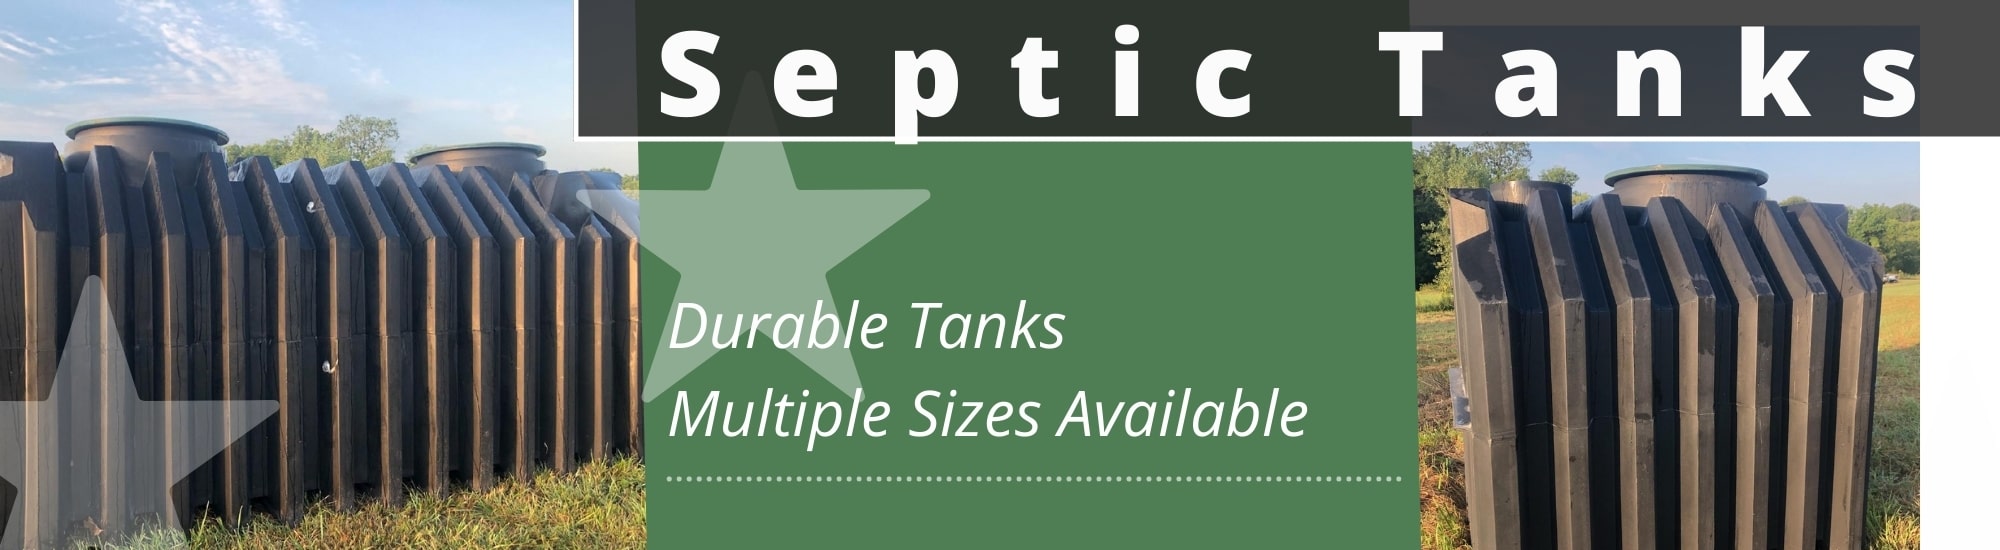 Septic Tanks Header